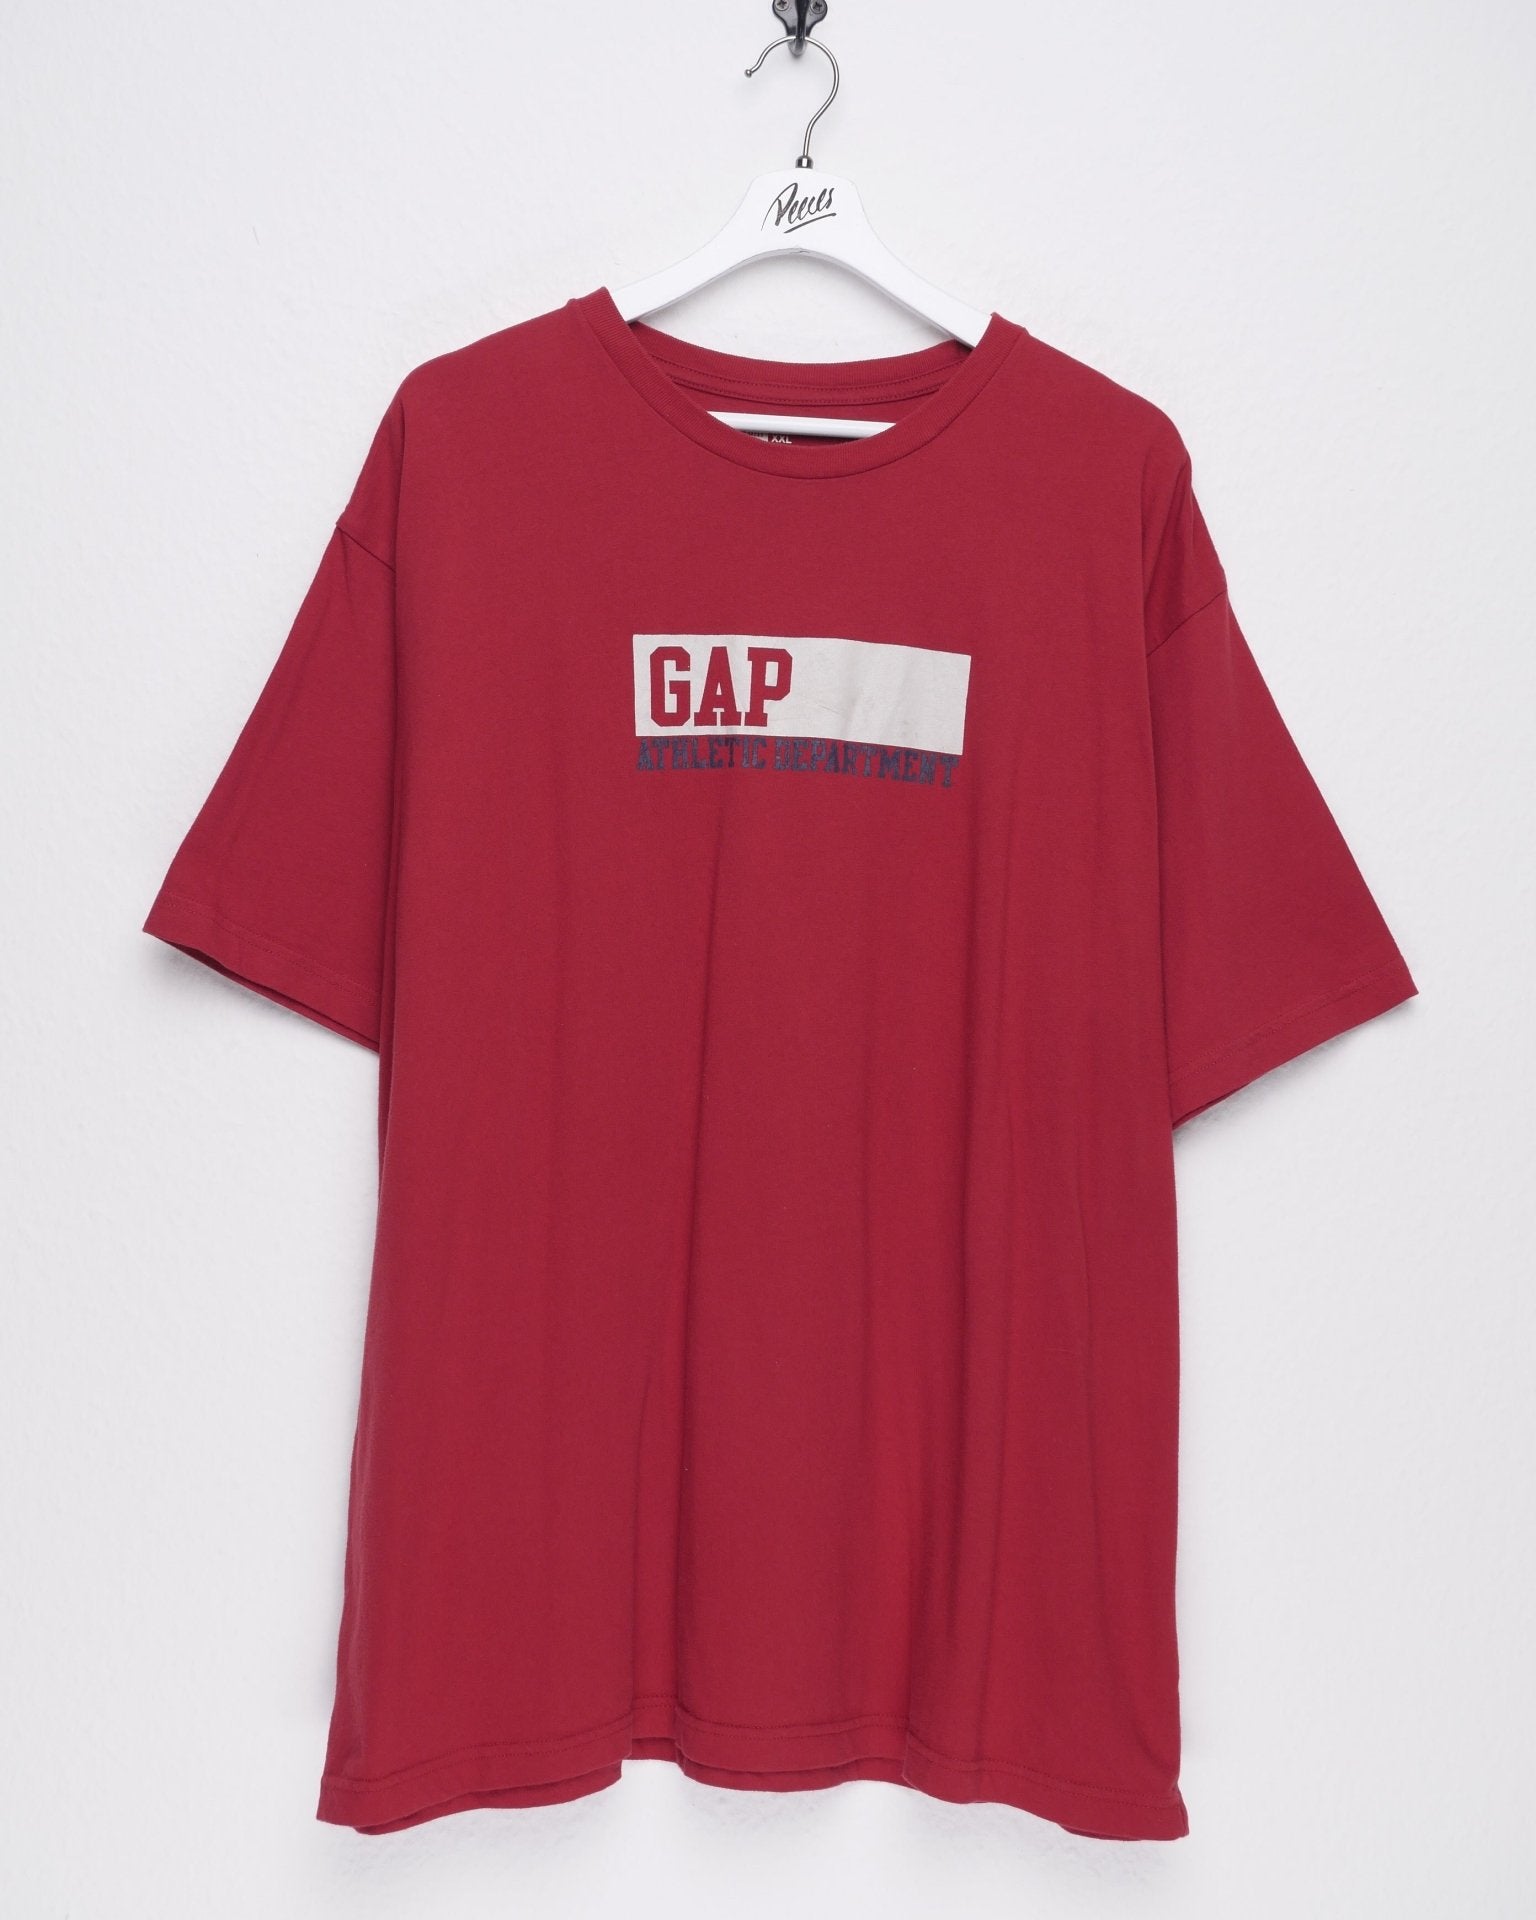 gap printed Logo red Shirt - Peeces